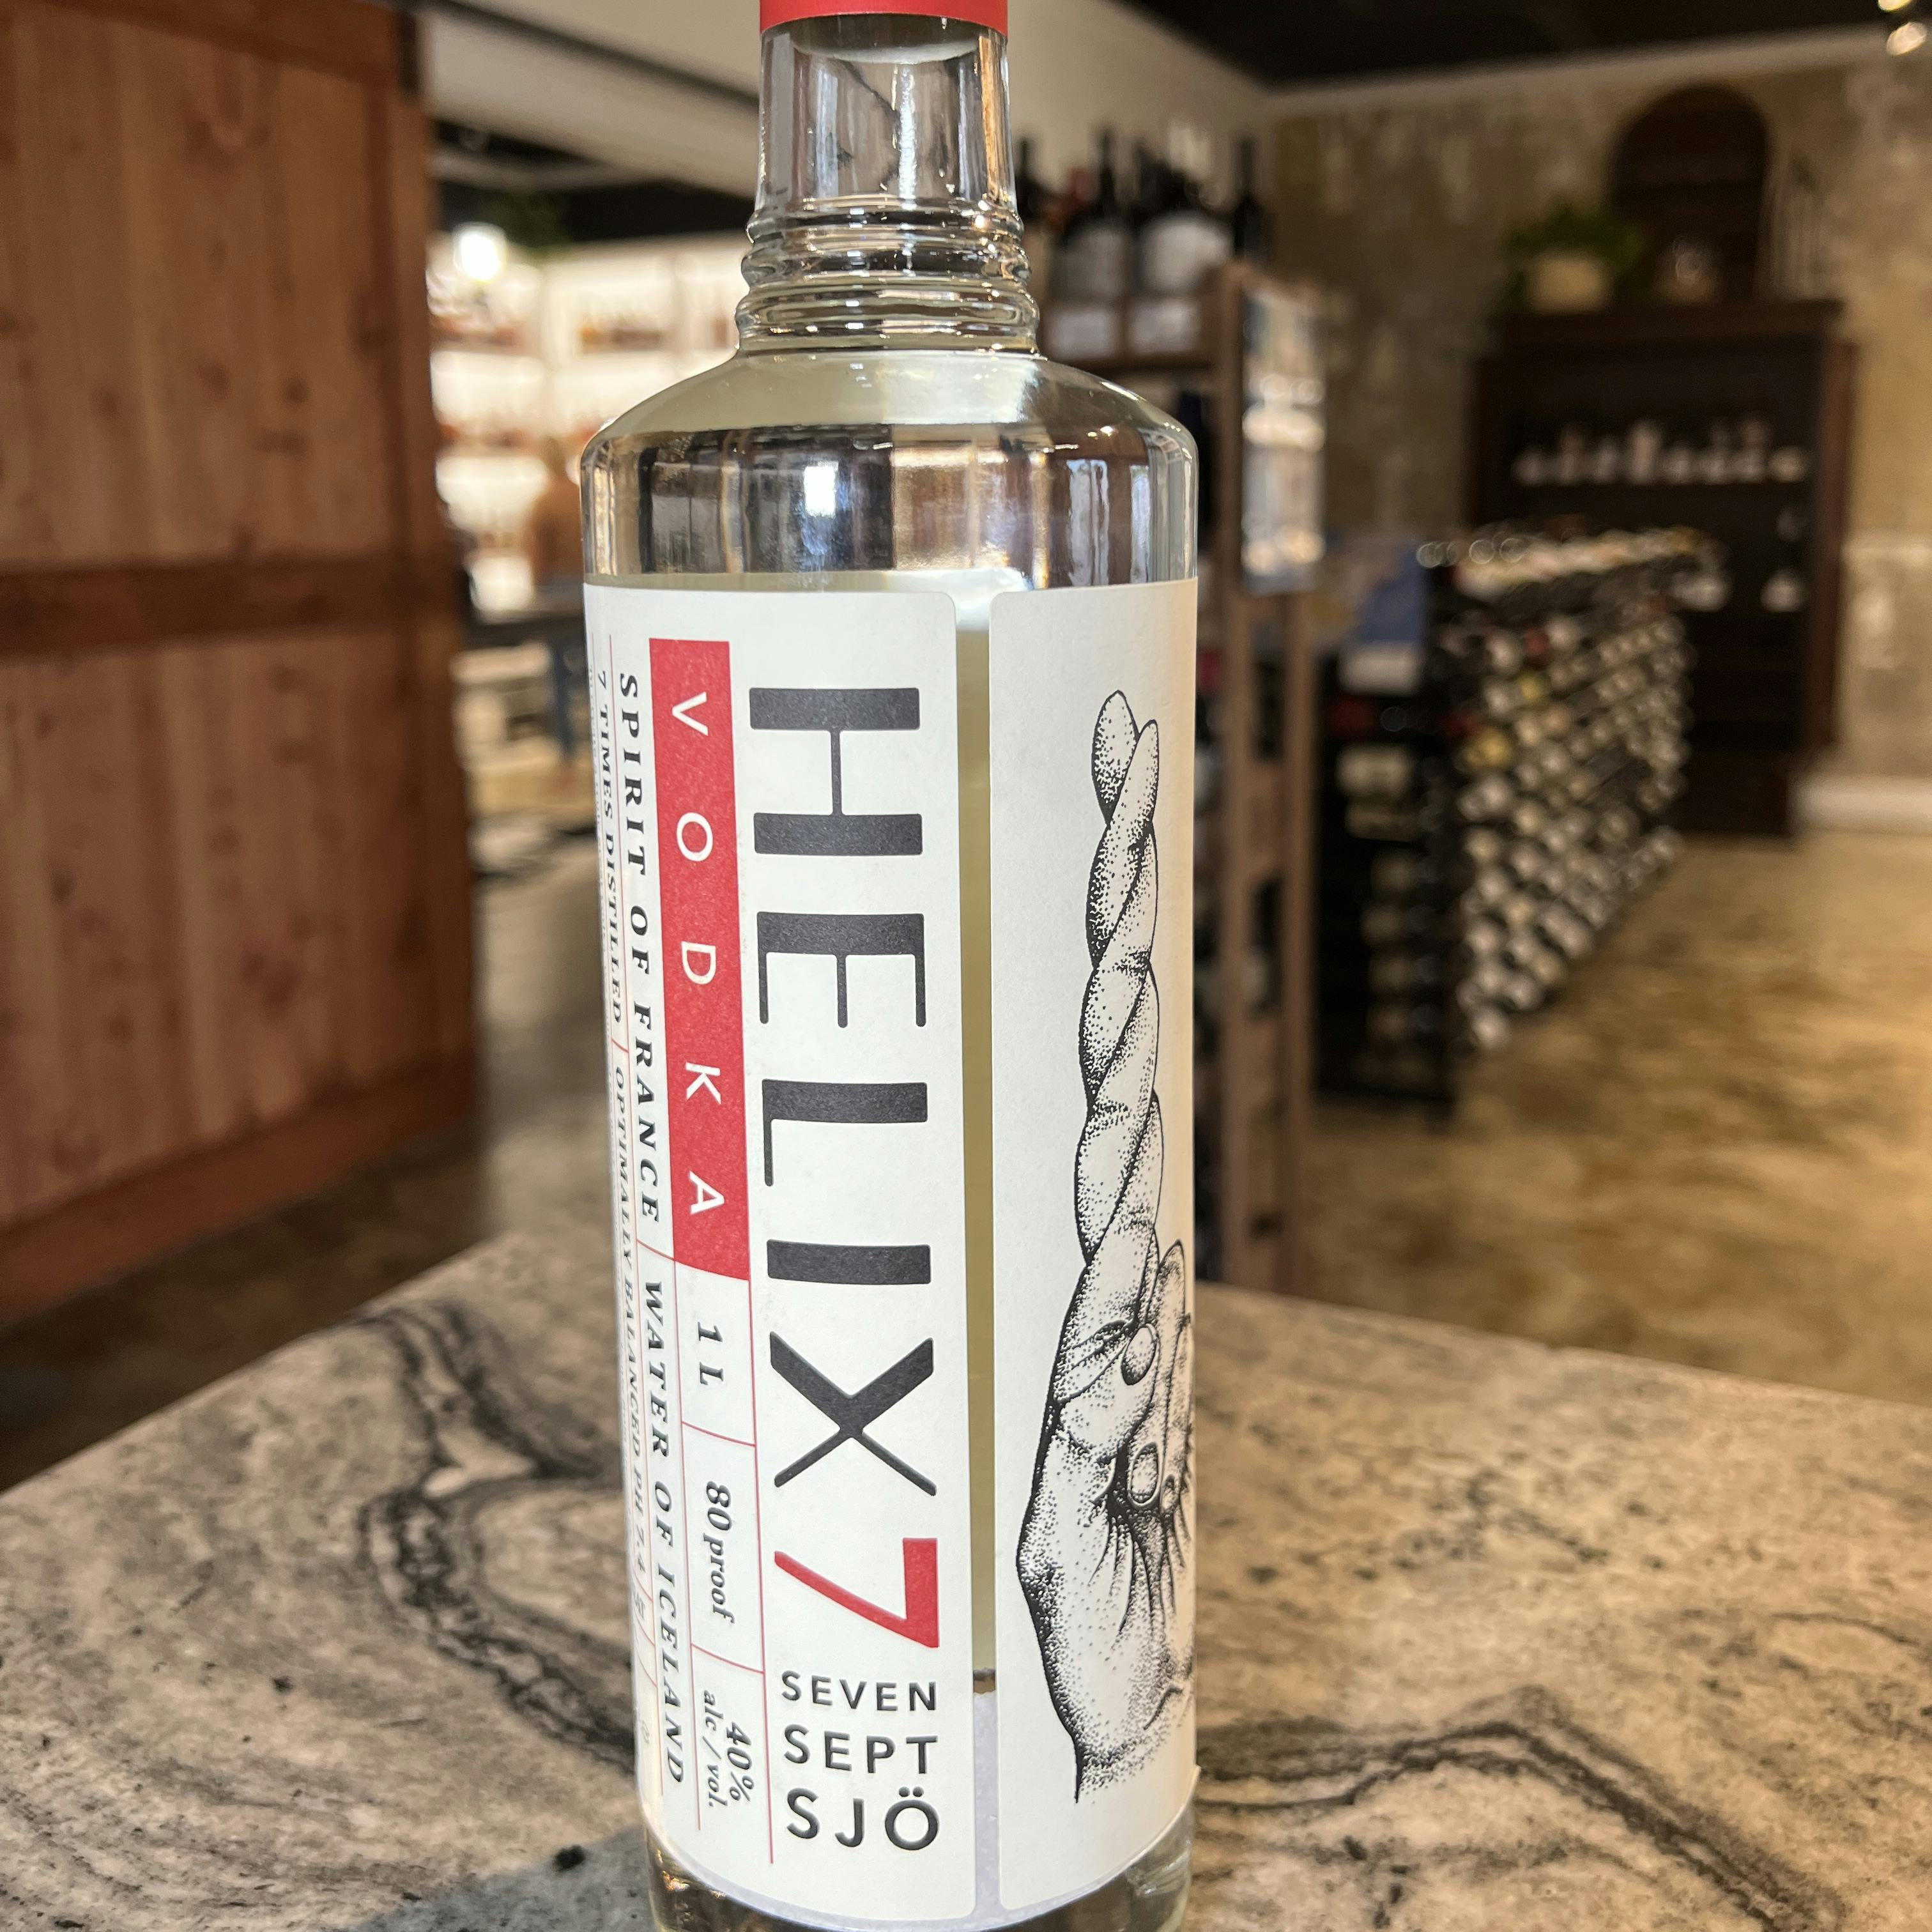 Helix Spirits Vodka 1L - Tonic Bottle & Cork